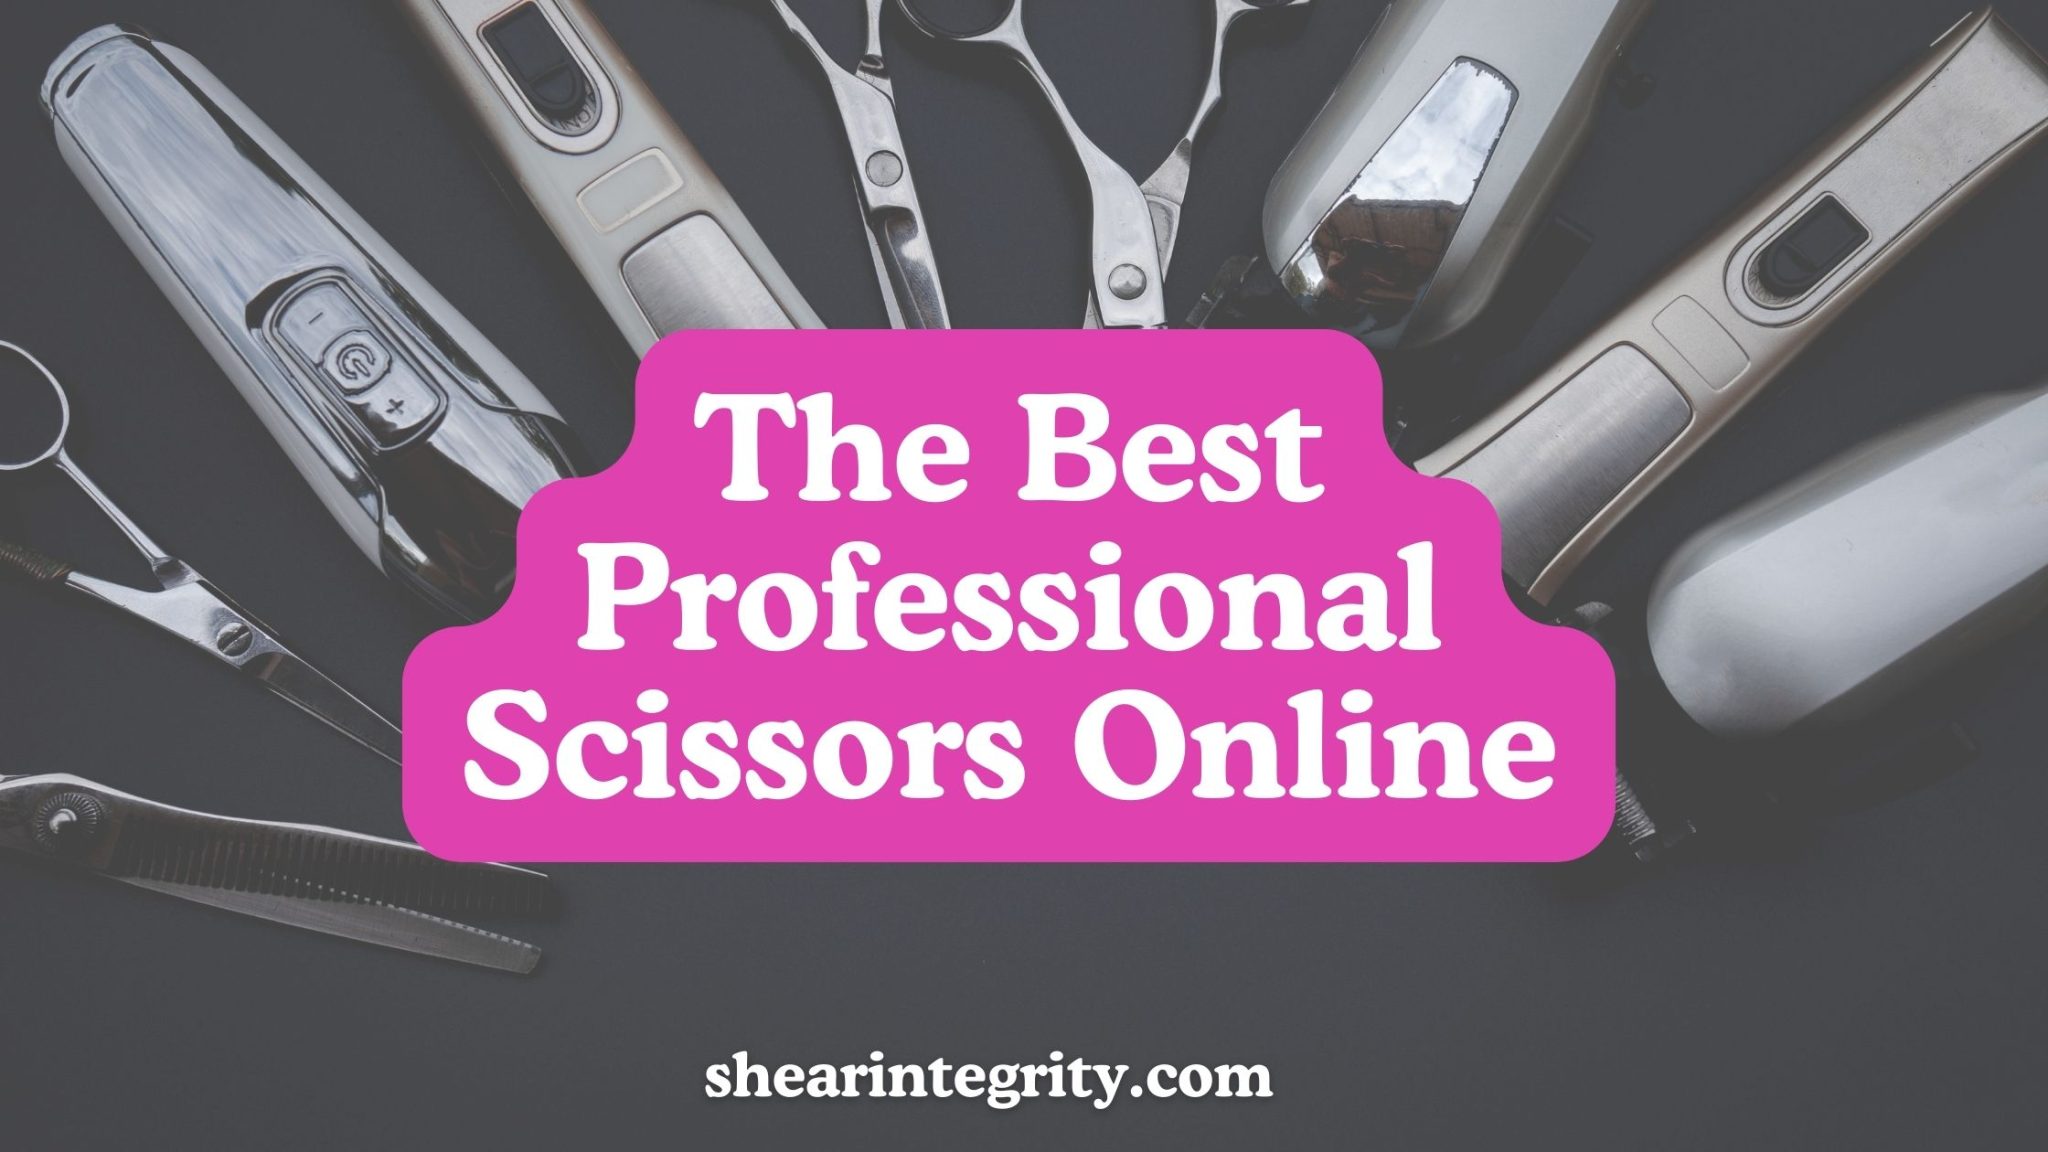 The Best Professional Scissors Online